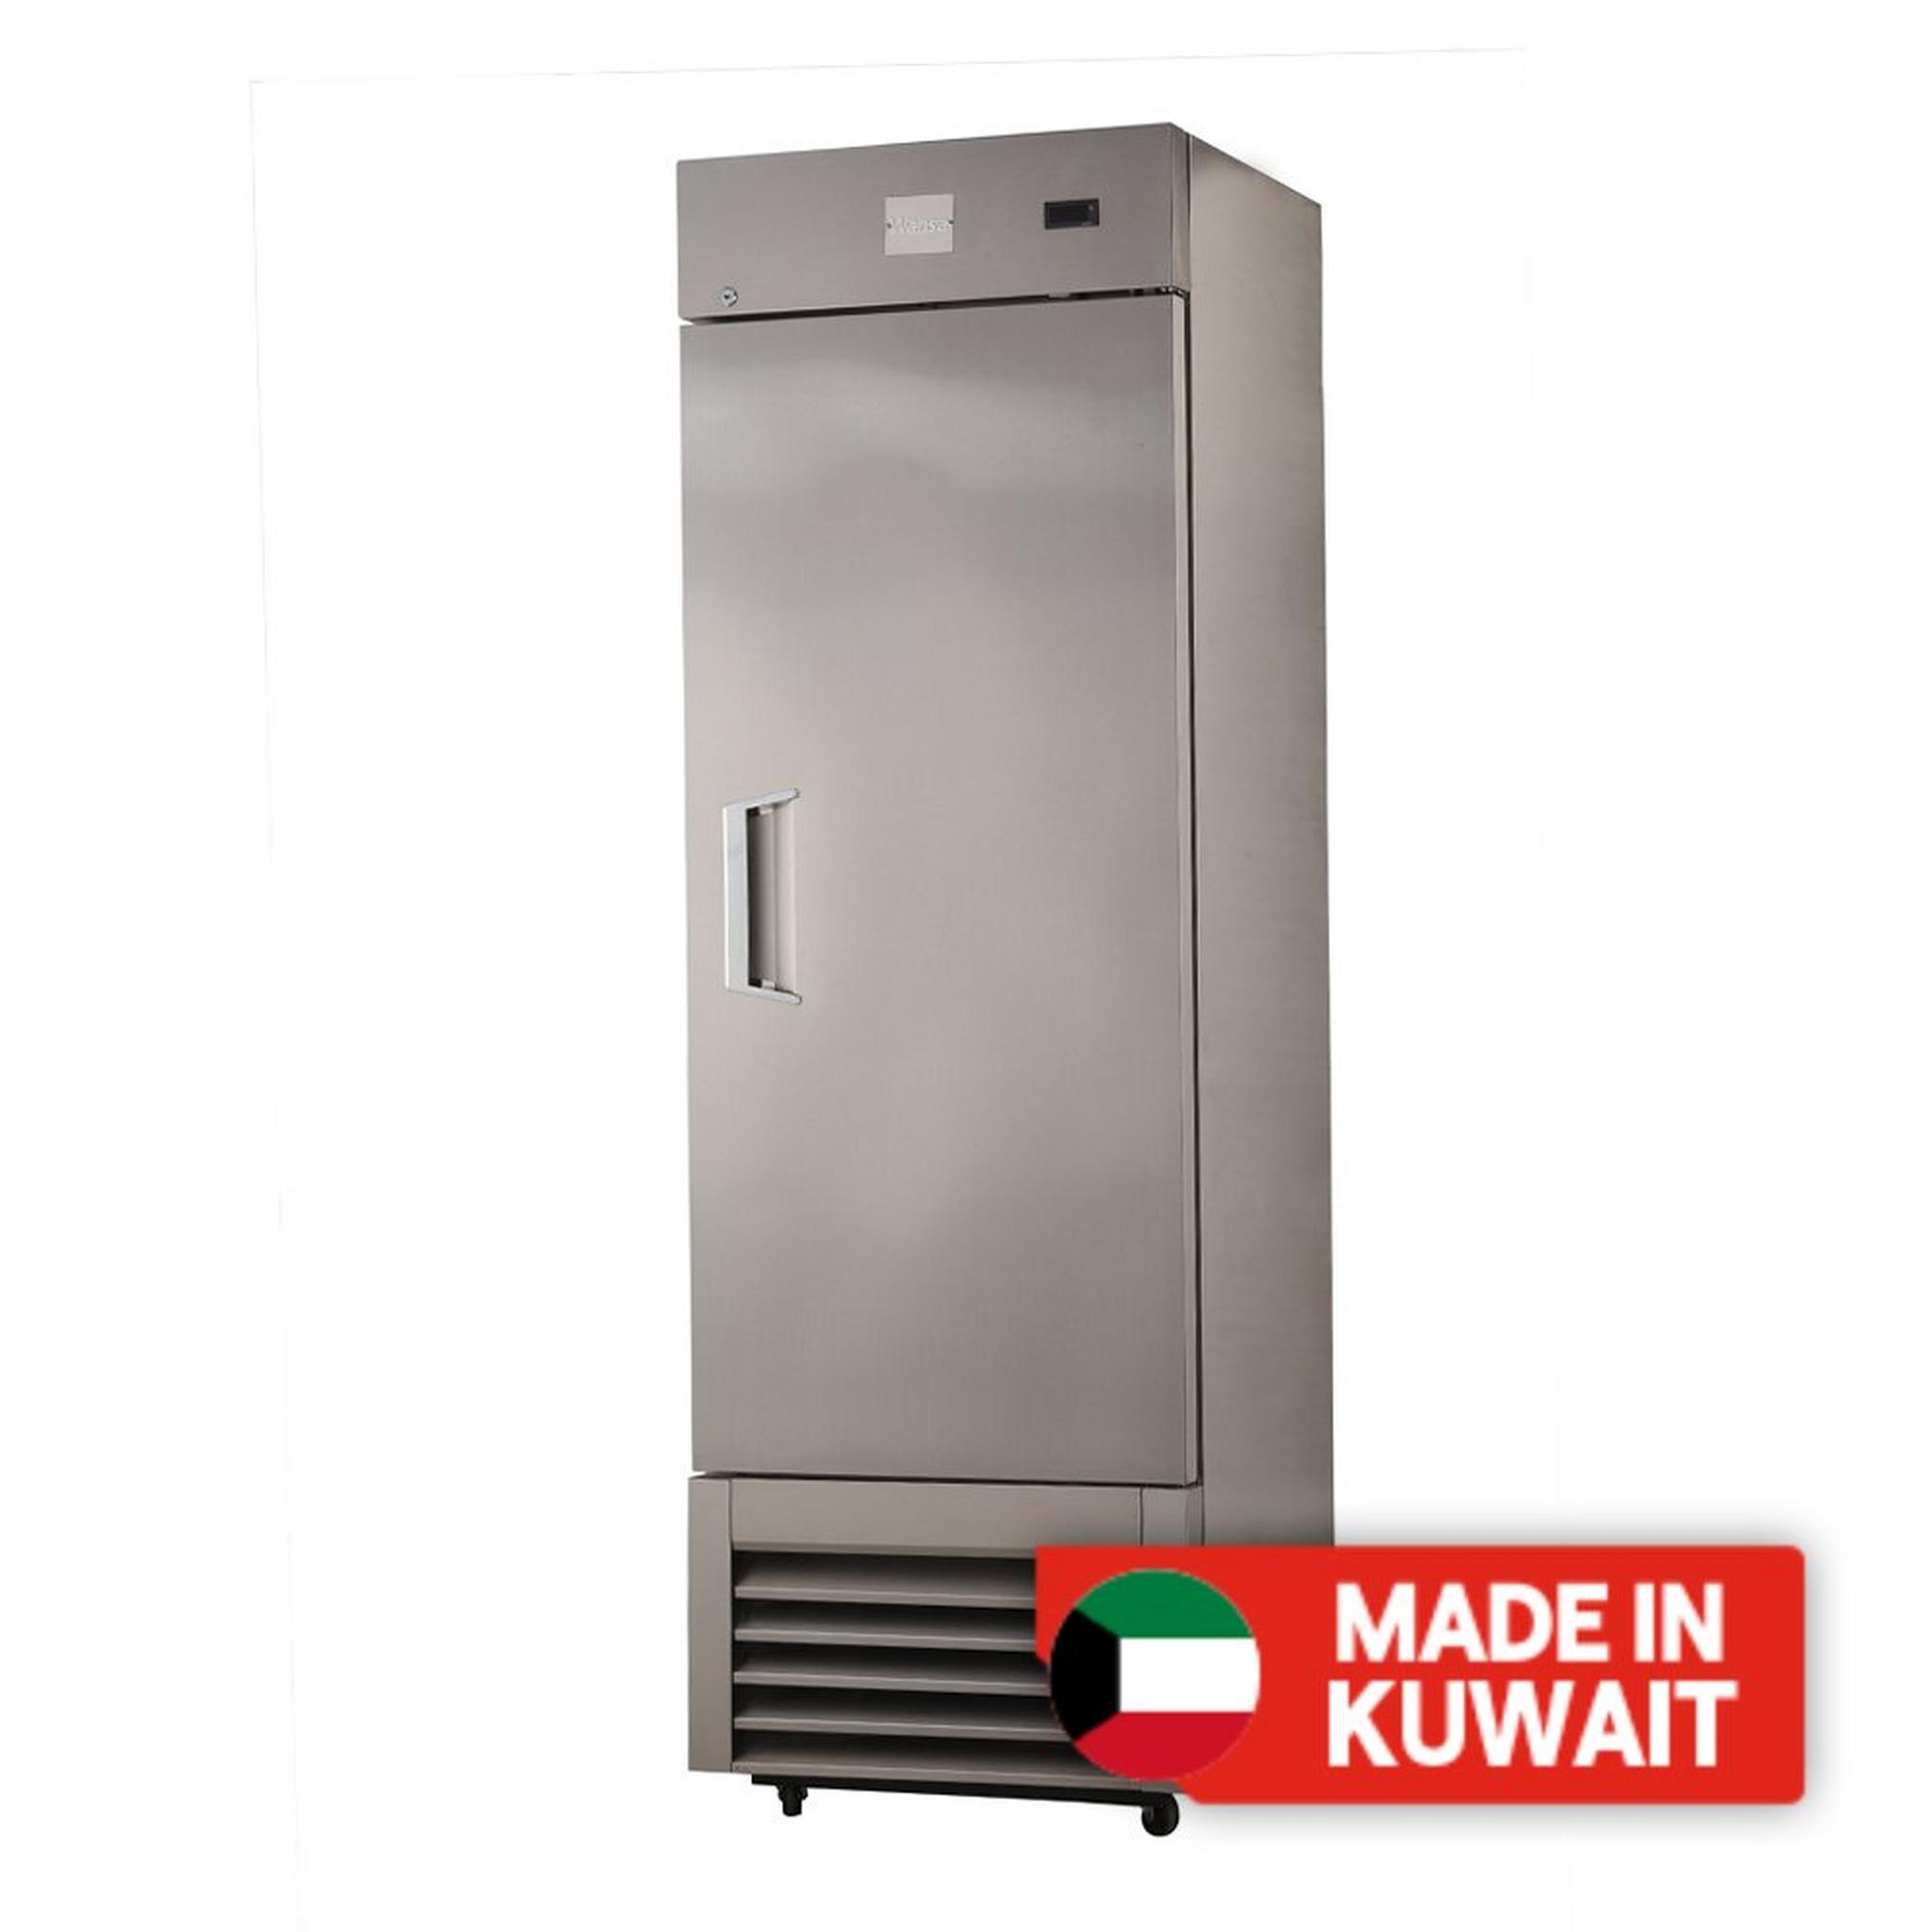 Wansa Single Door Refrigerator, 14CFT, 400-Liters, 1DAS - Stainless Steel